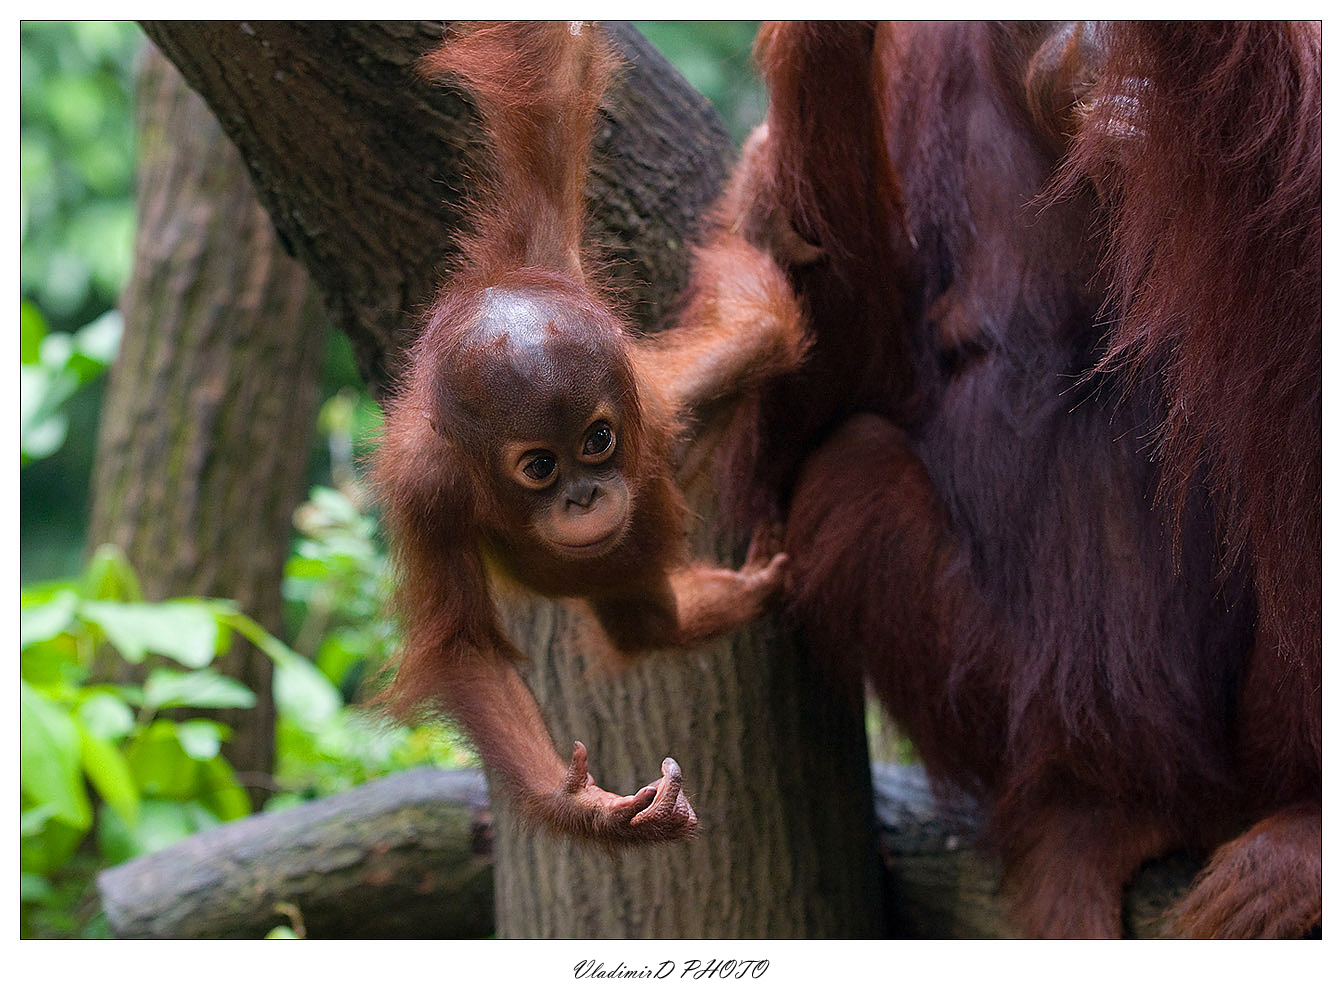 Orangutang titties